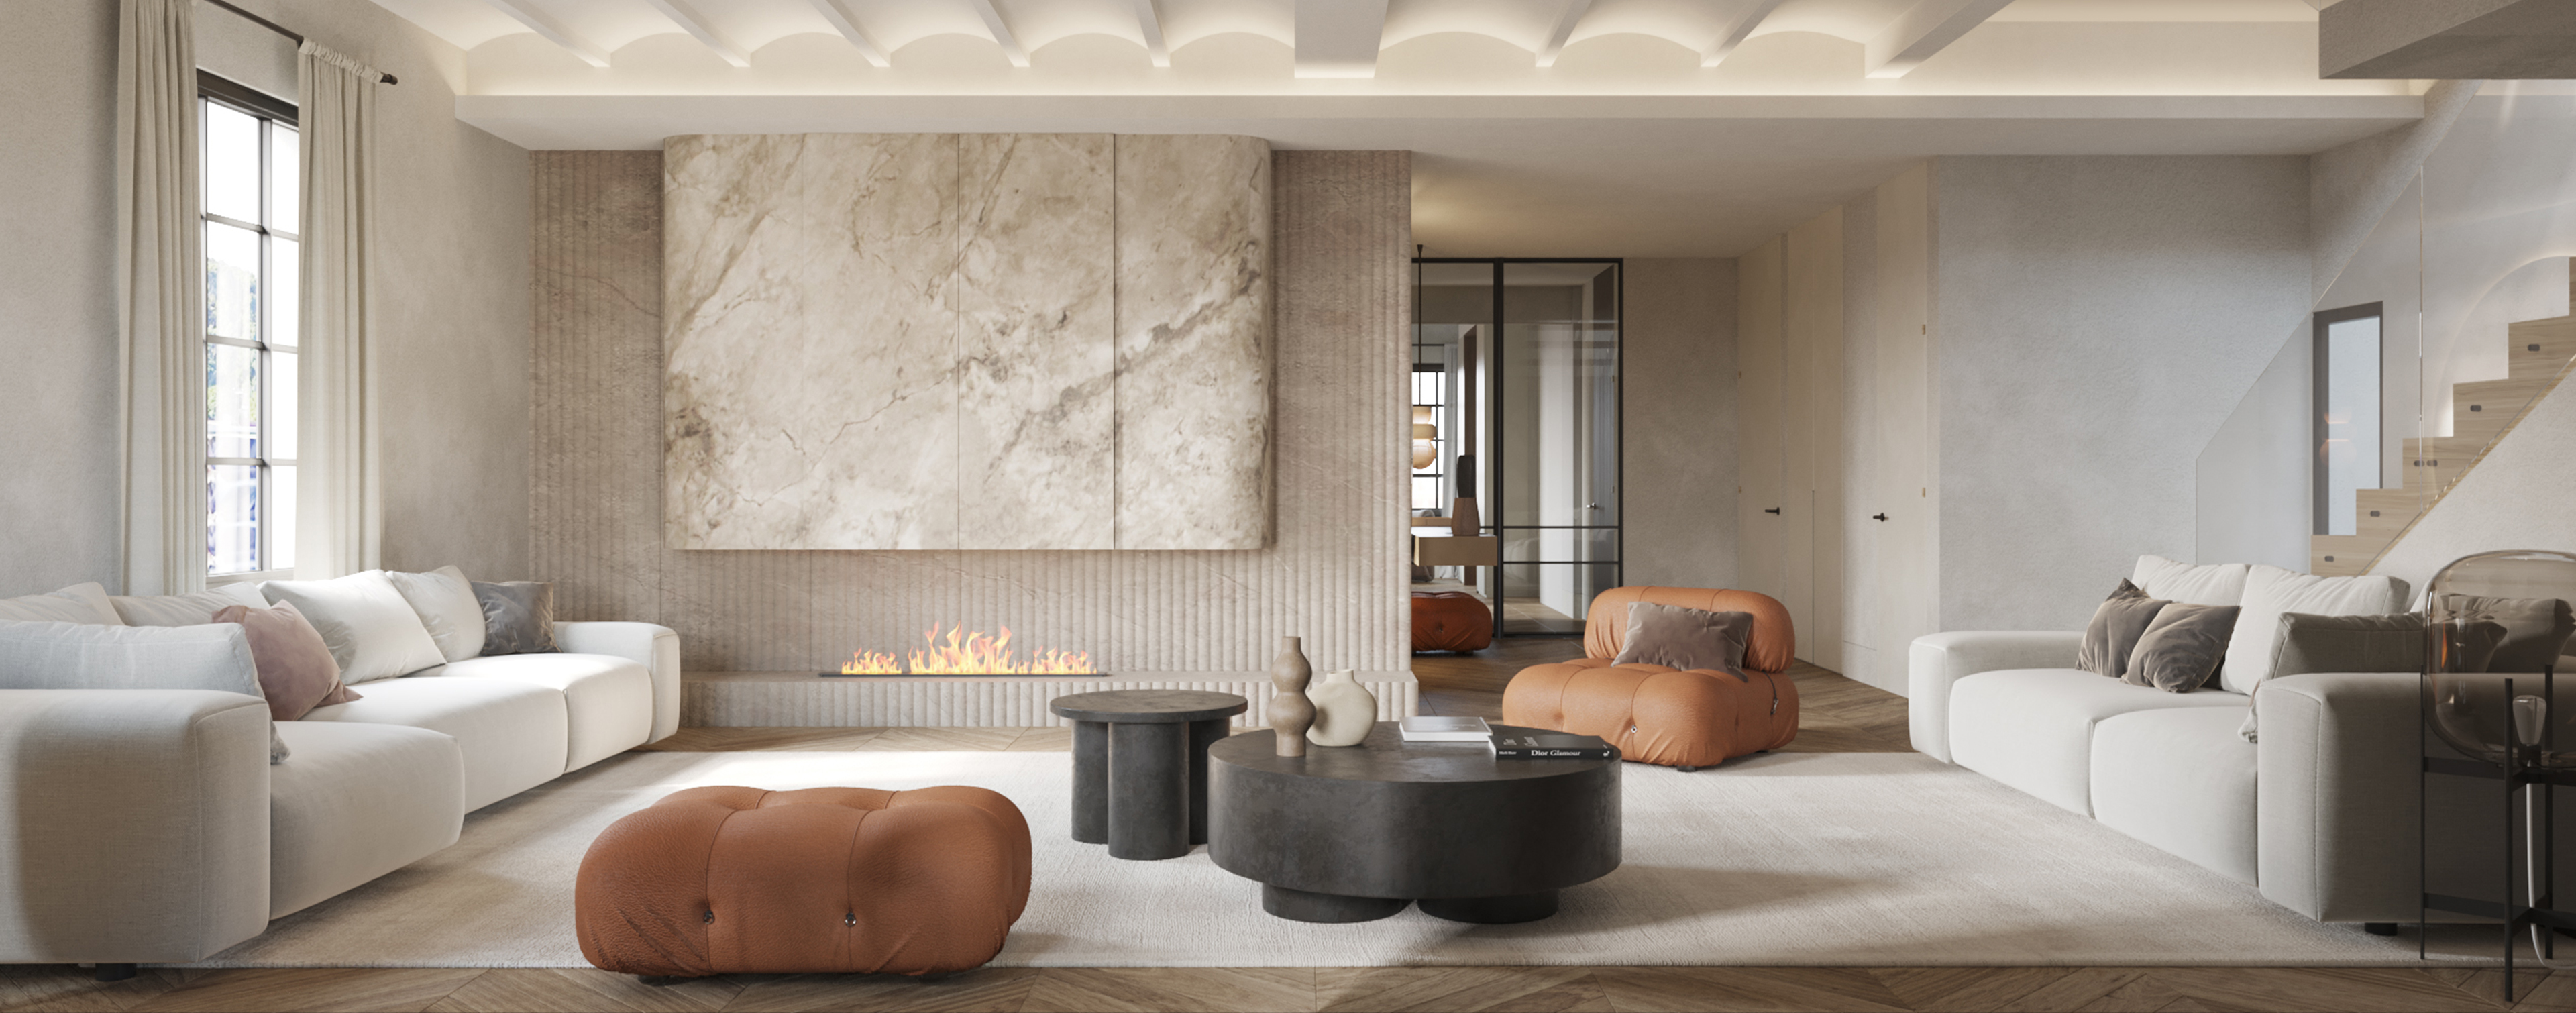 luv studio luxury architects barcelona pedralbes penthouse IMG 01 - LUV Studio - Arquitectura y diseño - Barcelona